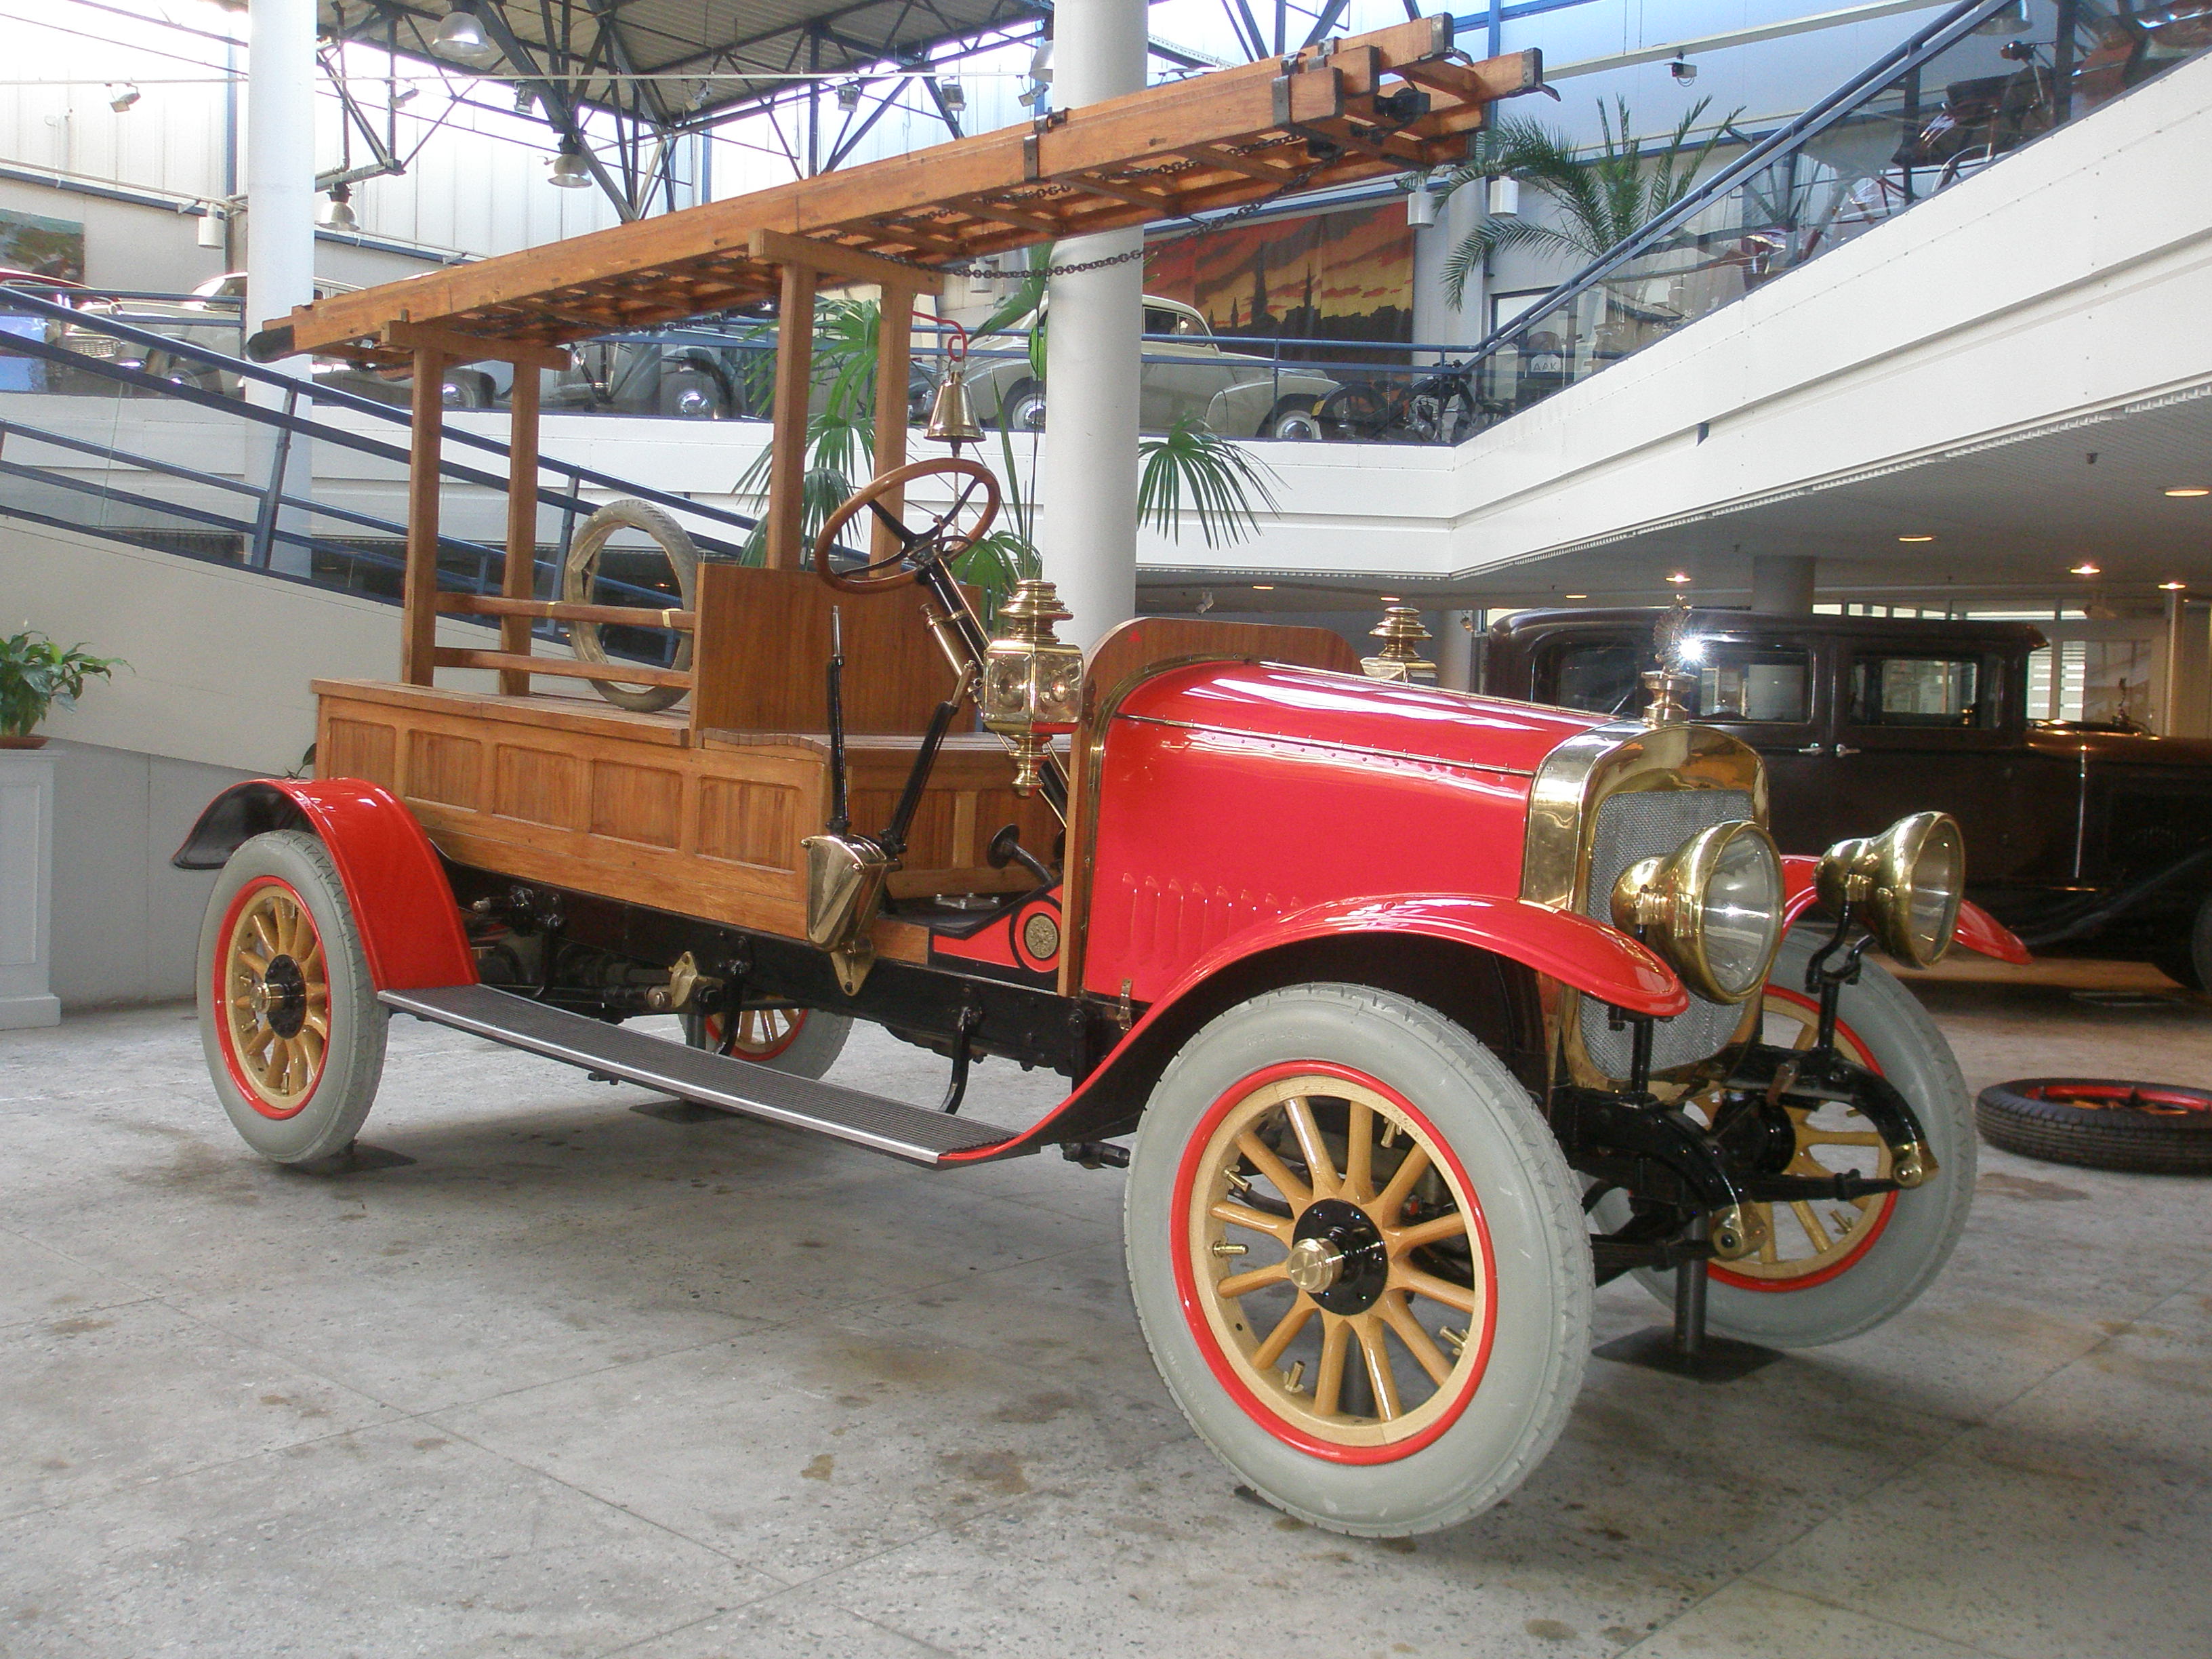 Автомобиль балт. Руссо Балт d-24/40. Пожарный Руссо-Балт. Пожарная машина Руссо-Балт 1913. Пожарный автомобиль Руссо-Балт.